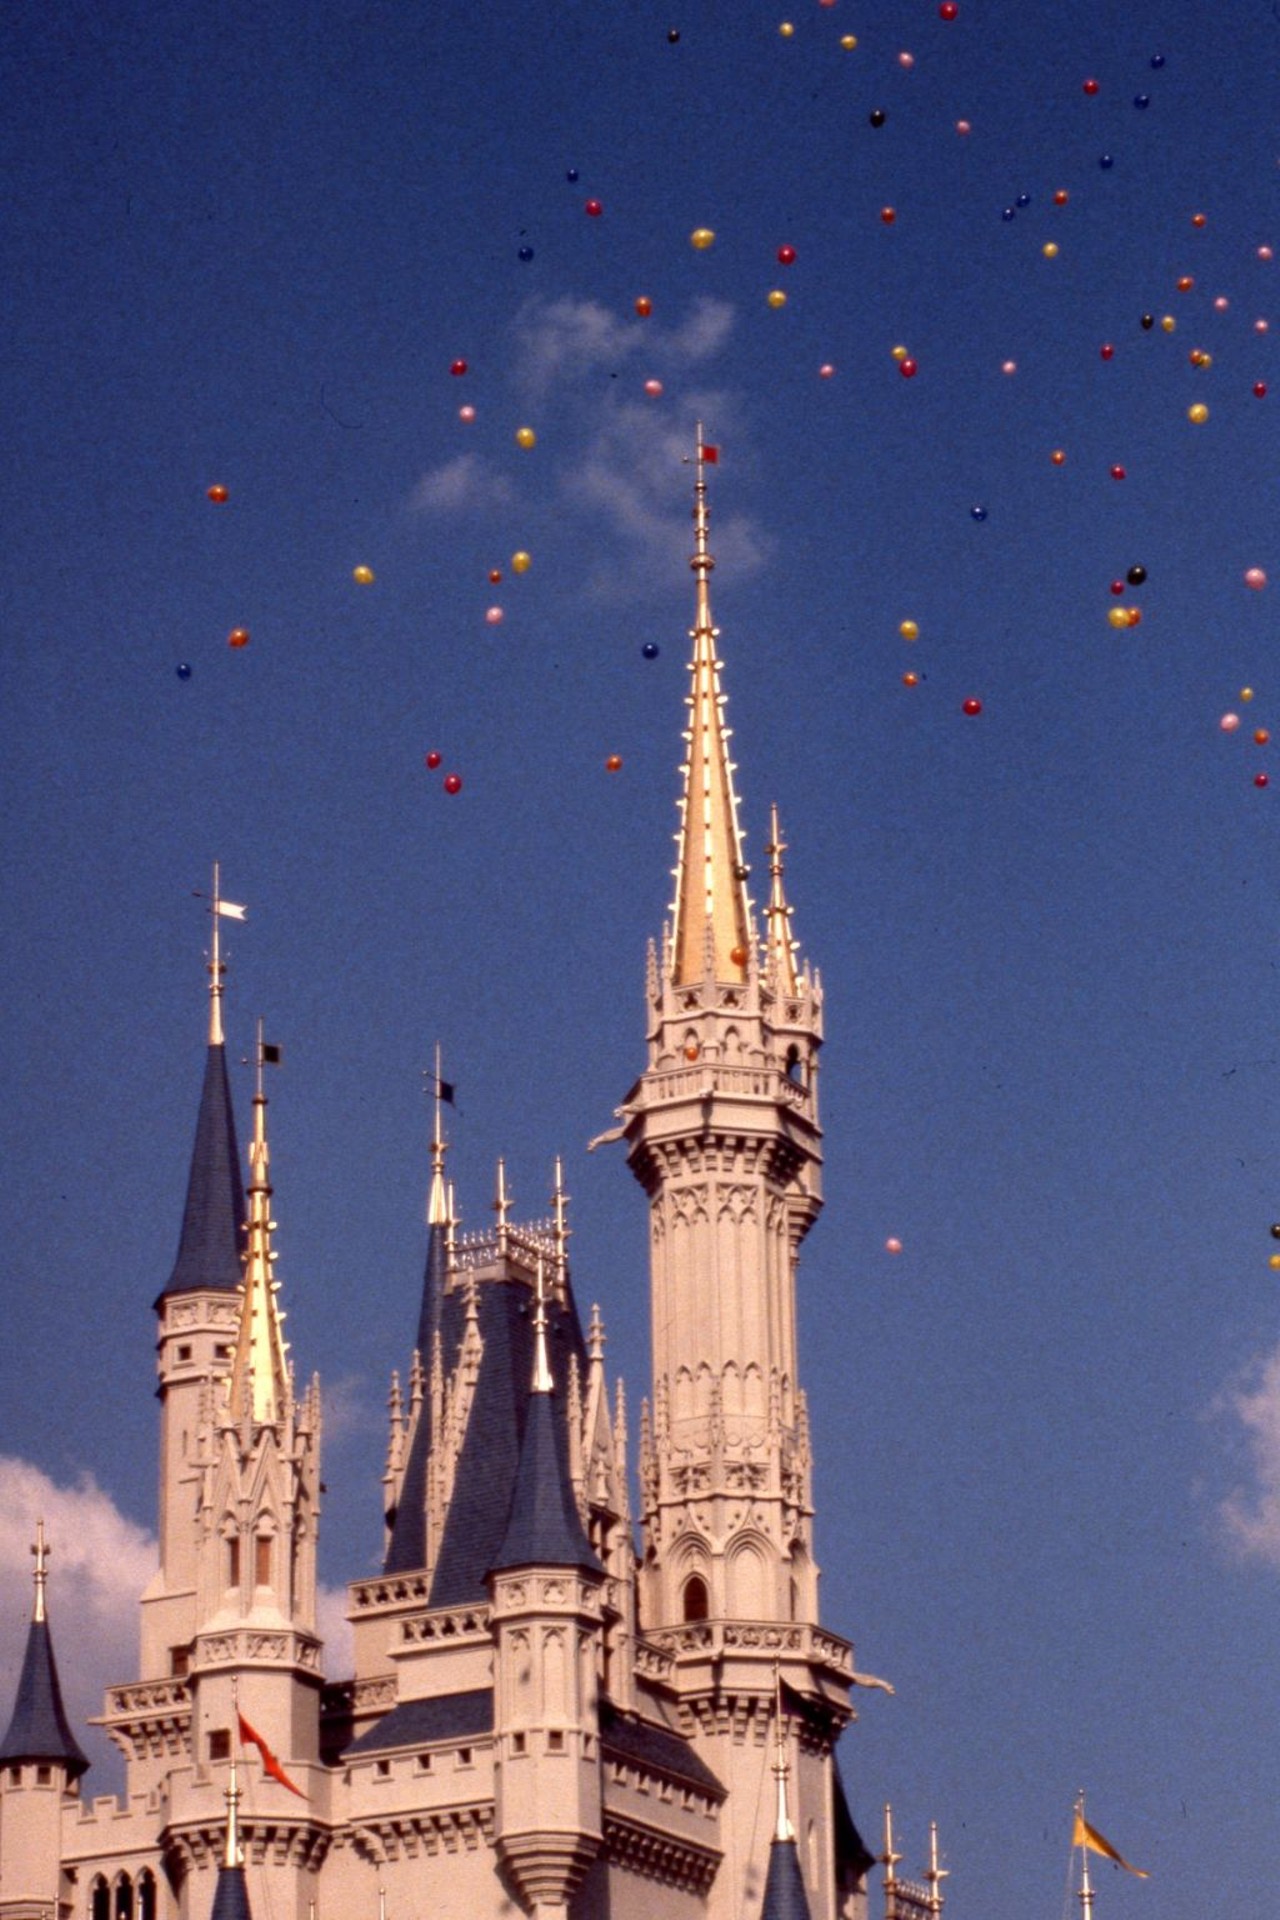 Balloons flying high above Cinderella's castle - Walt Disney World, Florida, 1981